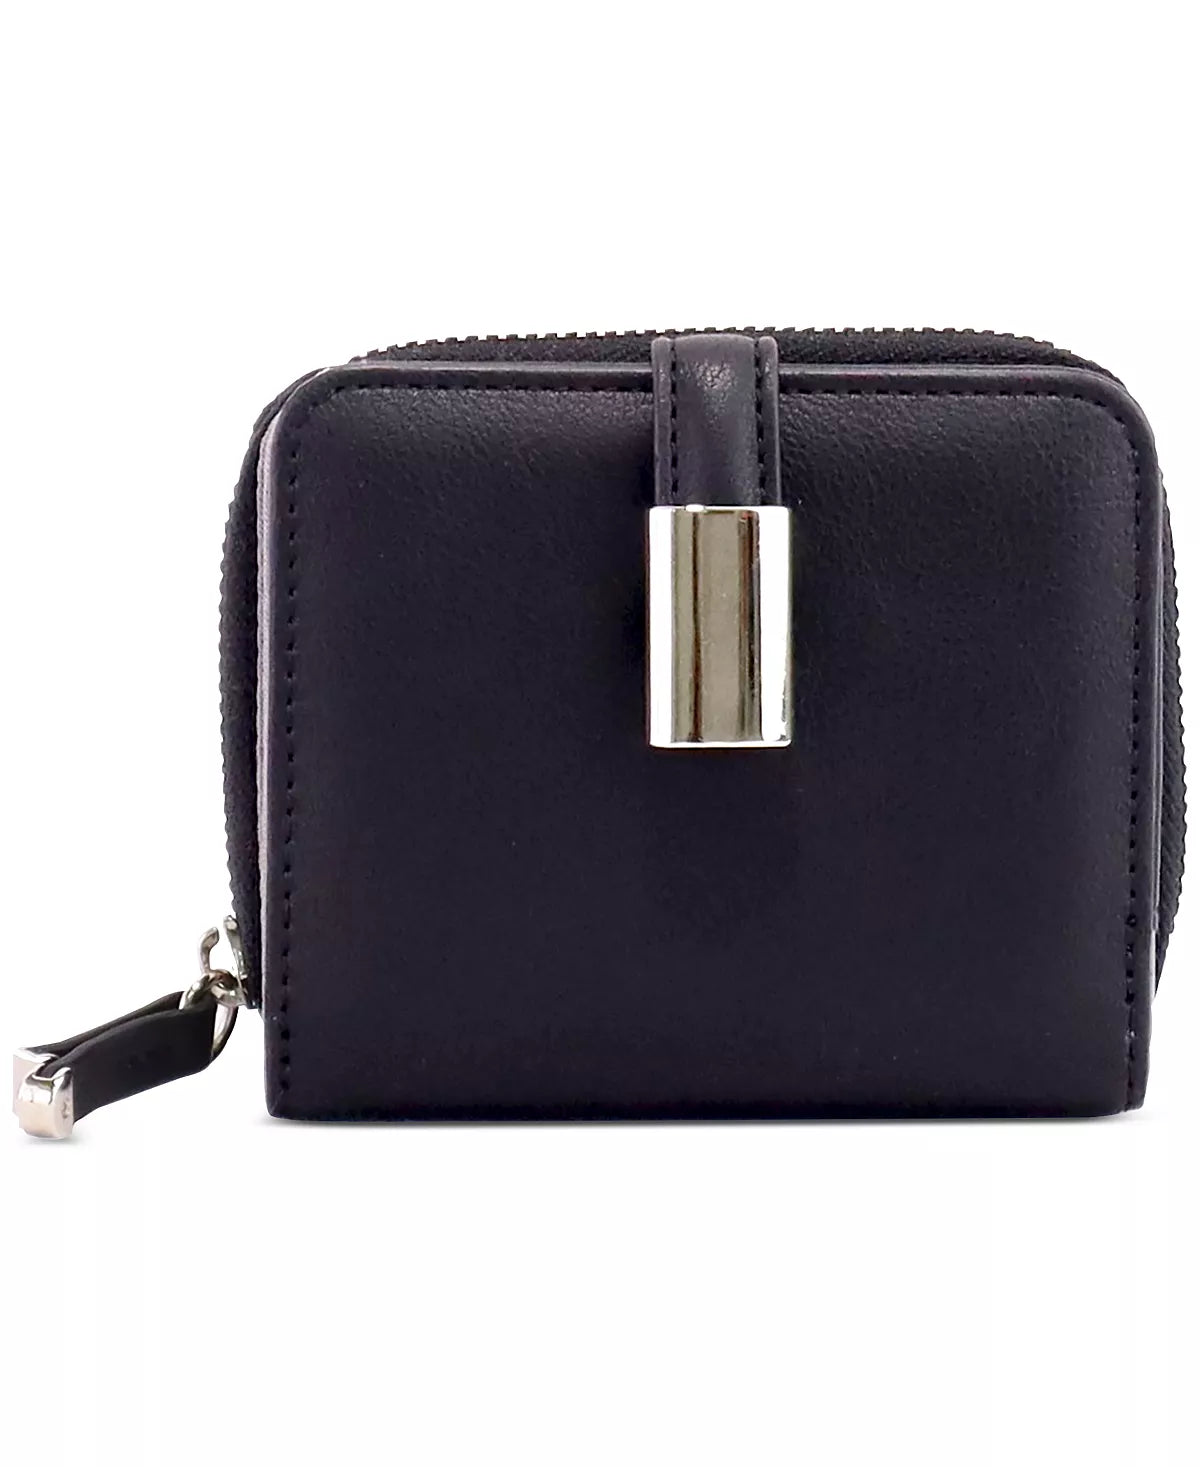 Alfani Abbiee Small Zip-Around Wallet in Black